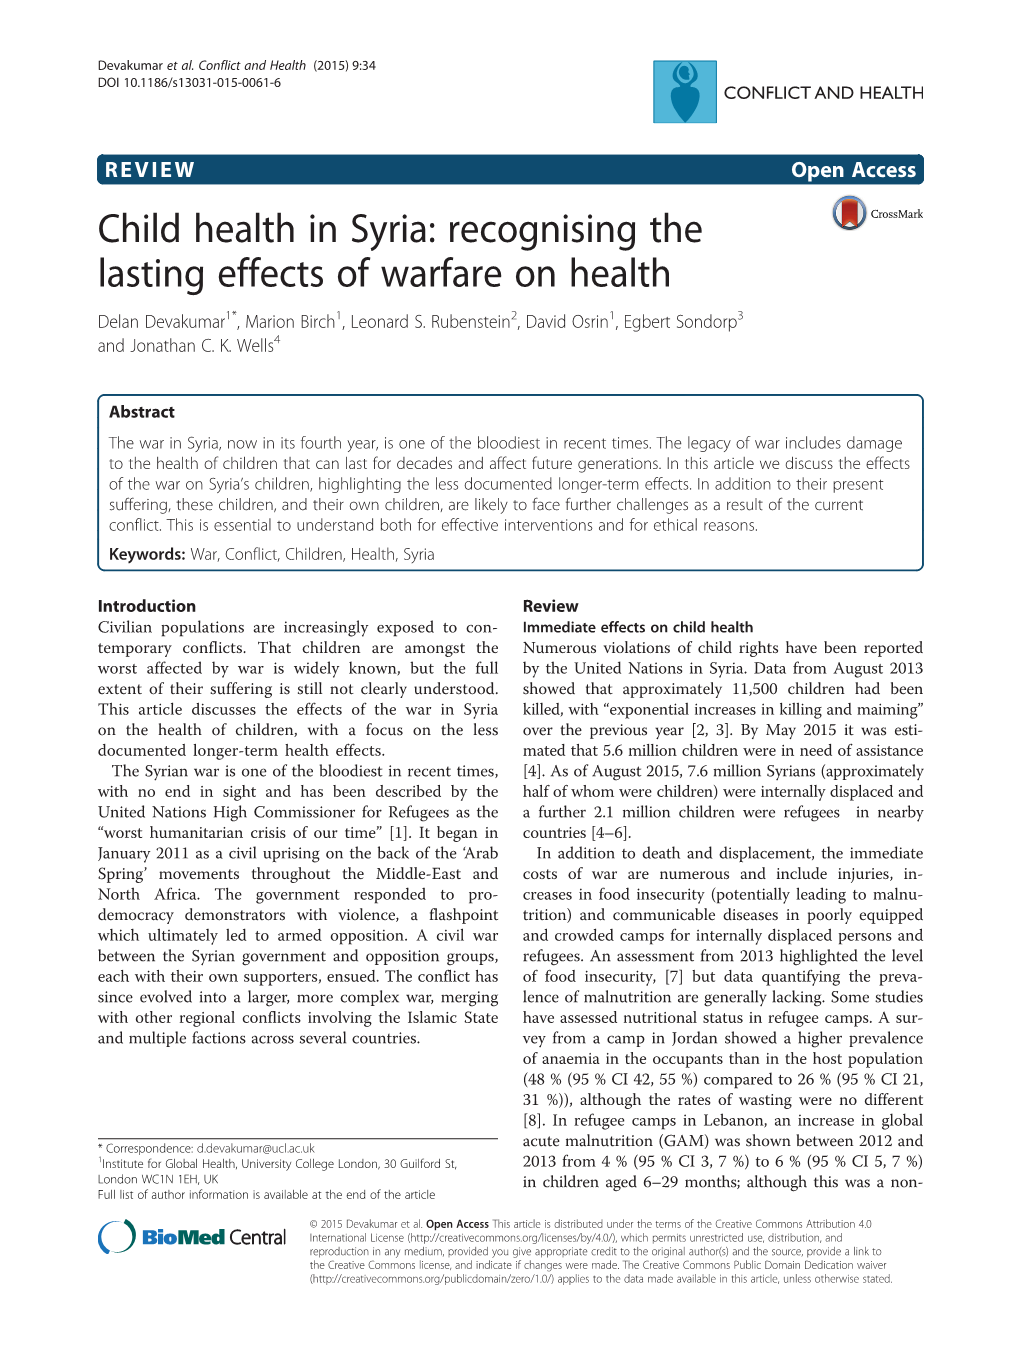 Child Health in Syria: Recognising the Lasting Effects of Warfare on Health Delan Devakumar1*, Marion Birch1, Leonard S